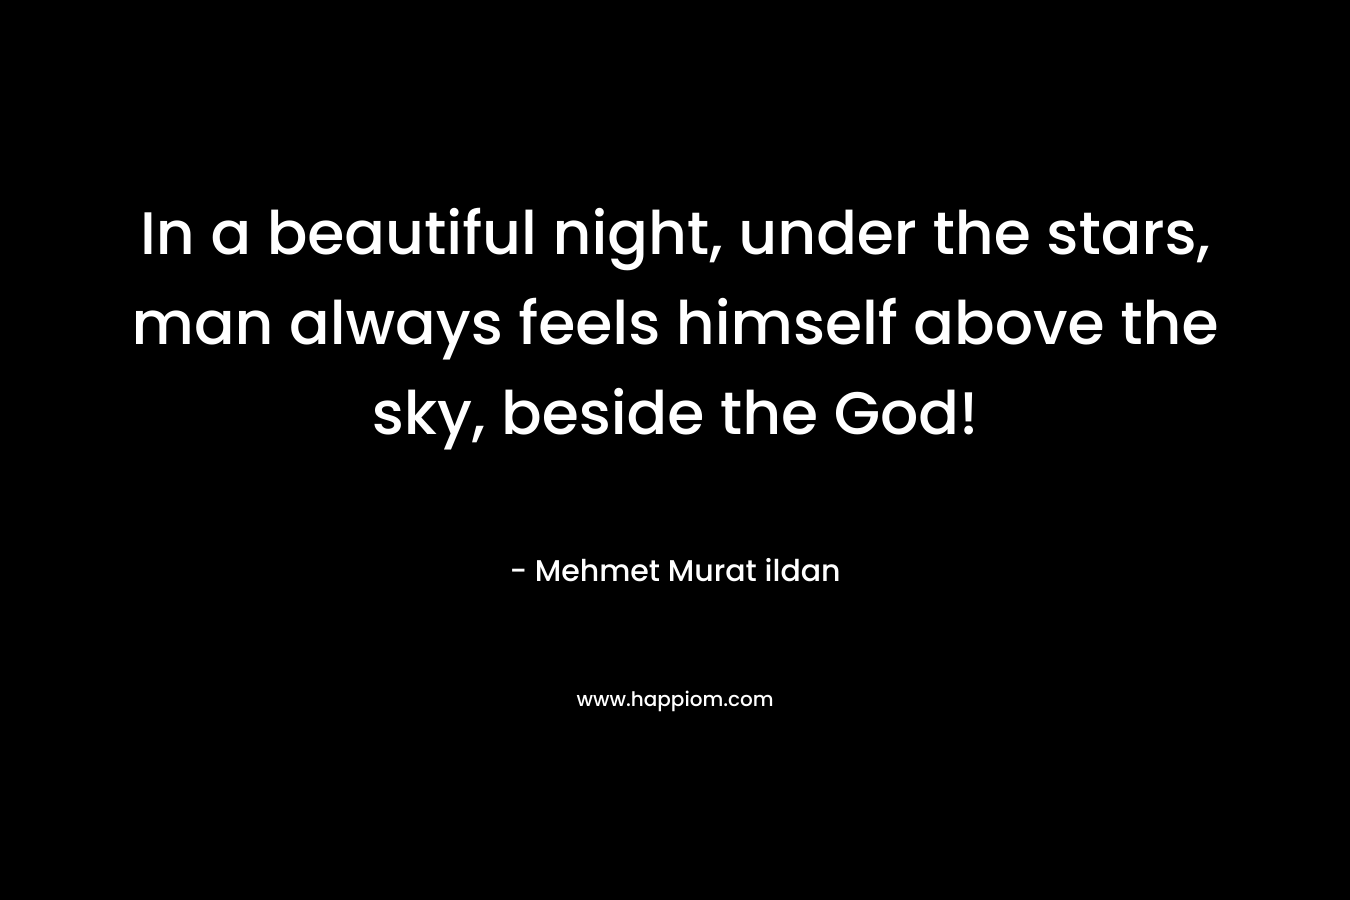 In a beautiful night, under the stars, man always feels himself above the sky, beside the God! – Mehmet Murat ildan